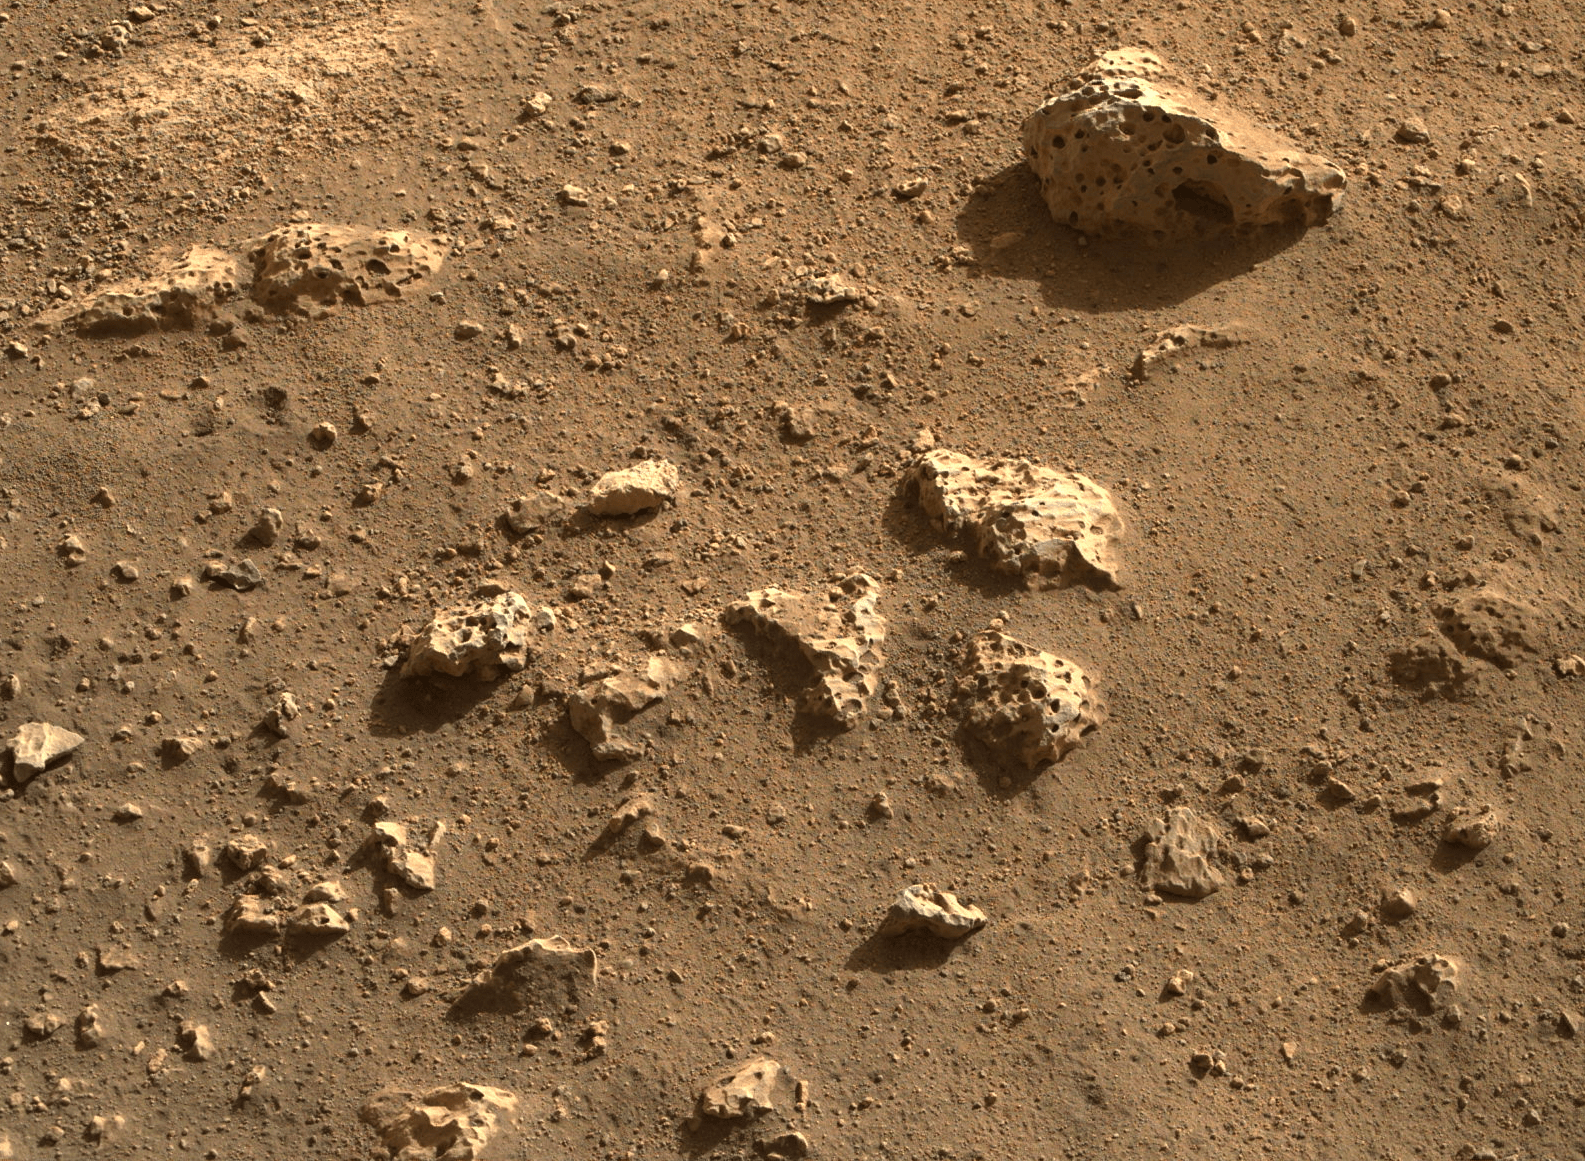 More rocks with holes.  (Image: NASA/JPL-Caltech/ASU)